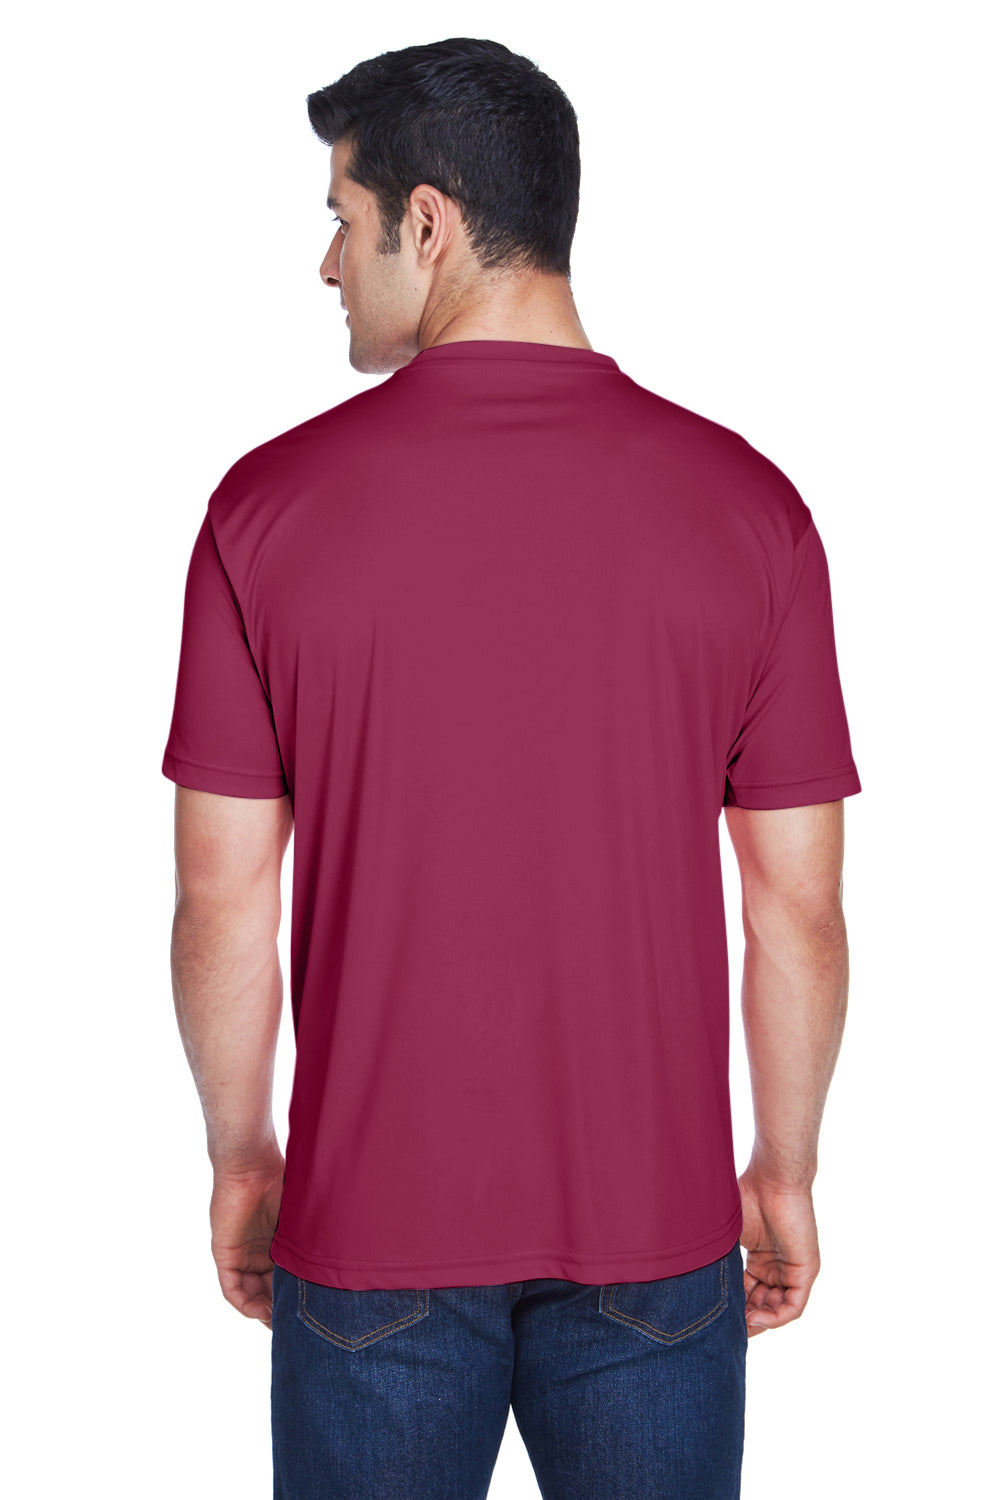 UltraClub 8420 Mens Cool & Dry Performance Moisture Wicking Short Sleeve Crewneck T-Shirt Maroon Back